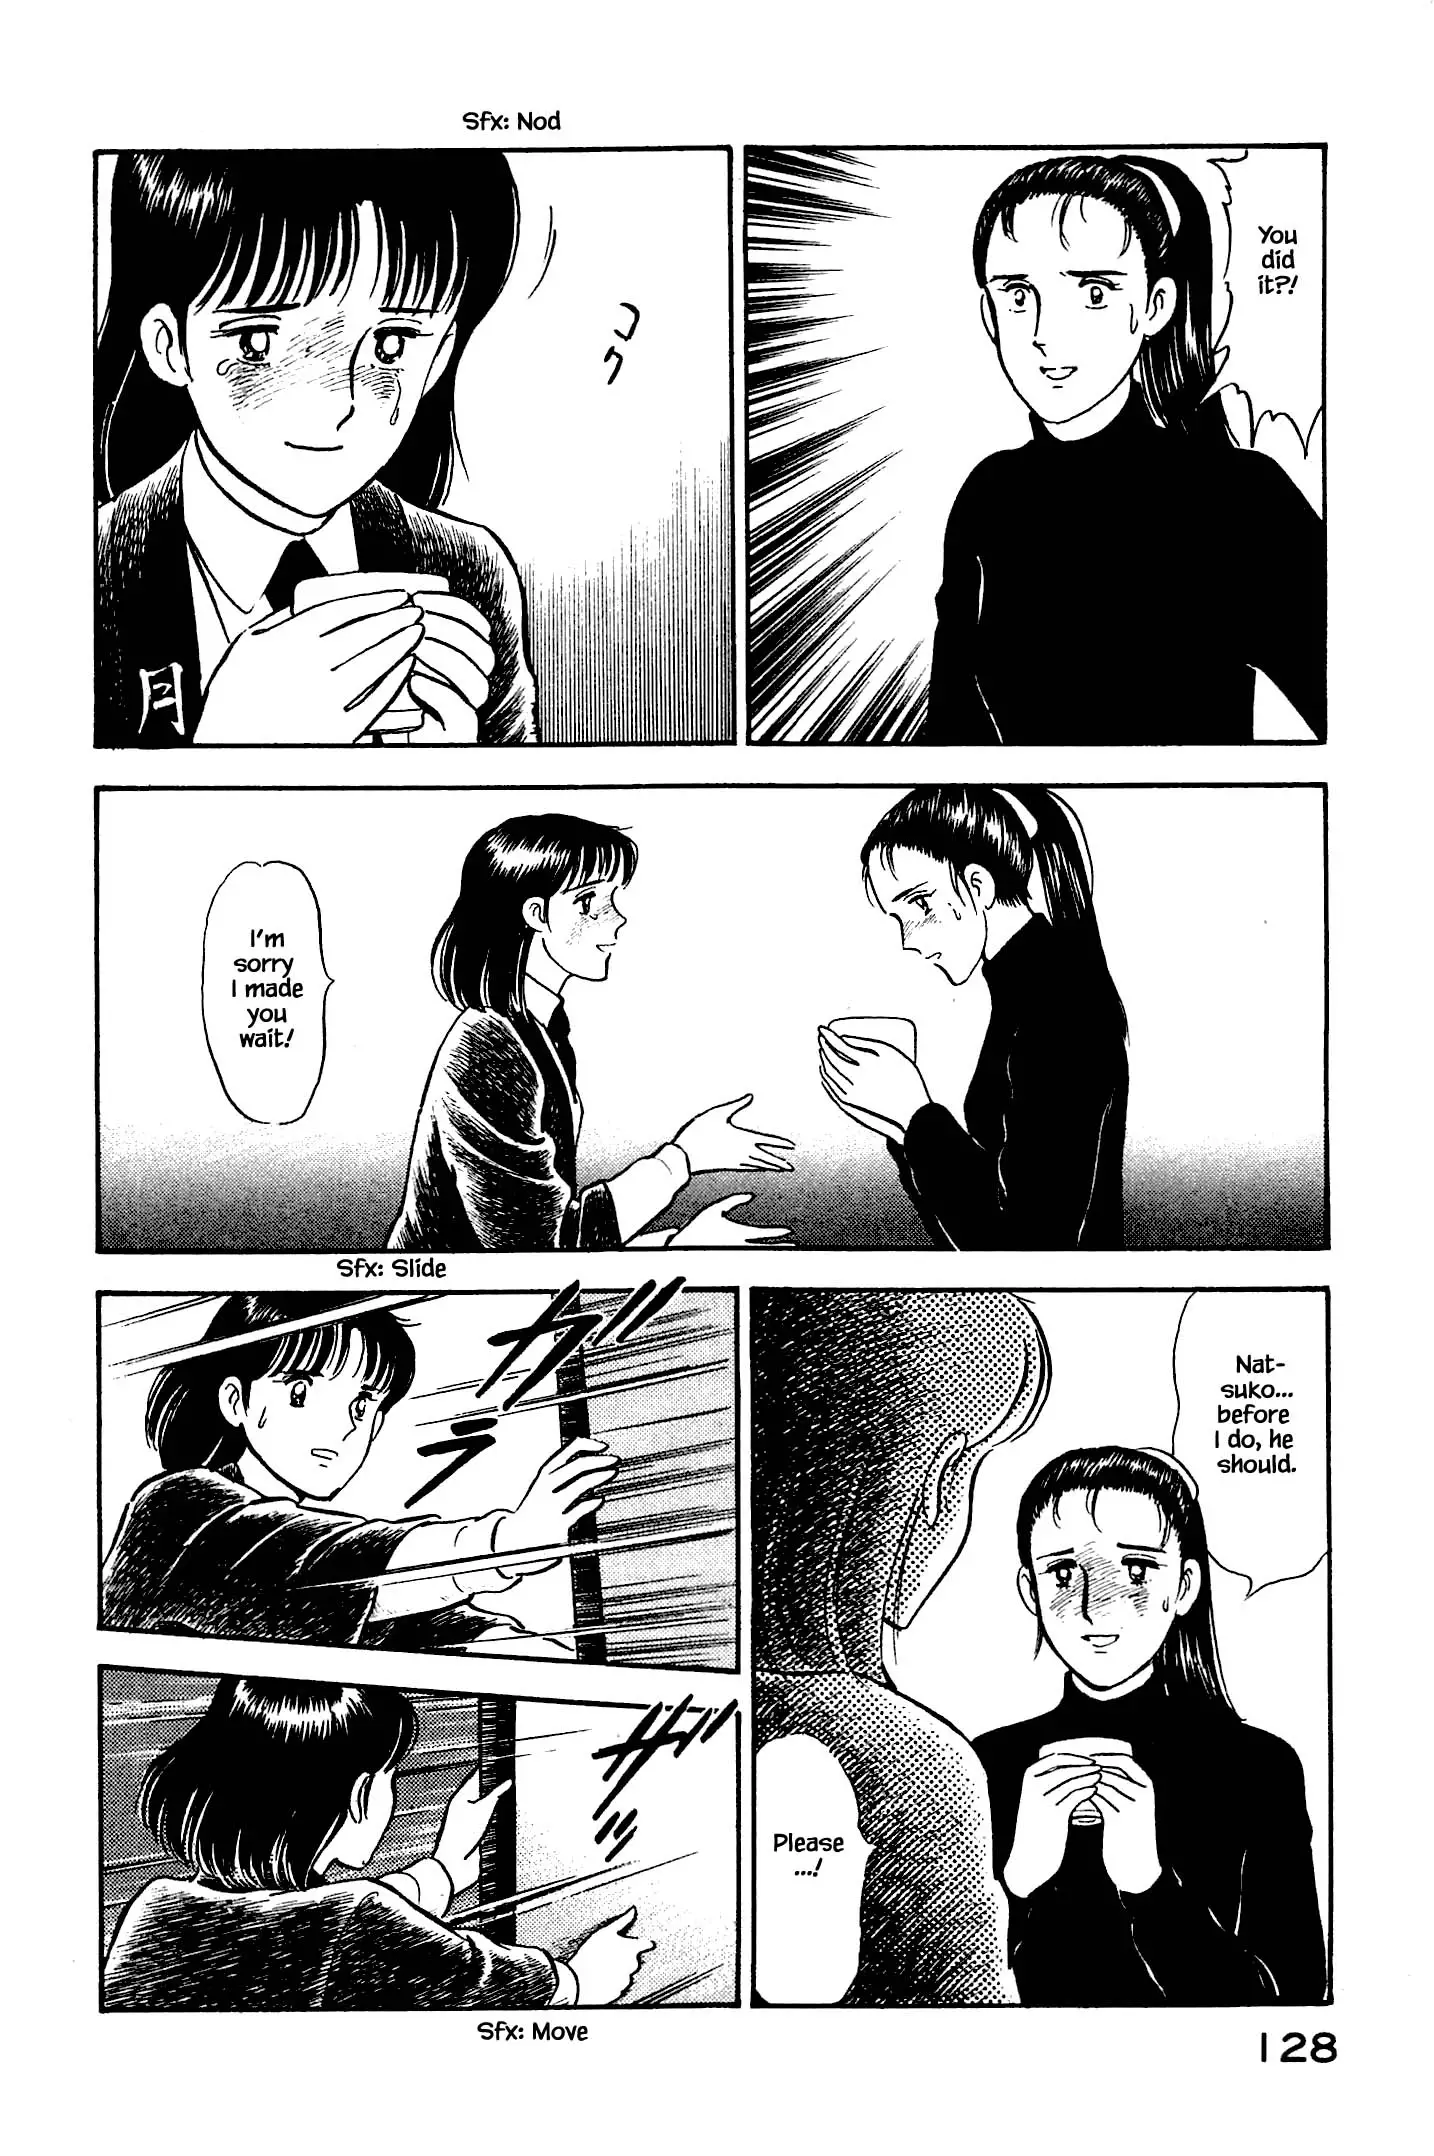 Natsuko's Sake - 127 page 7-98bb7840